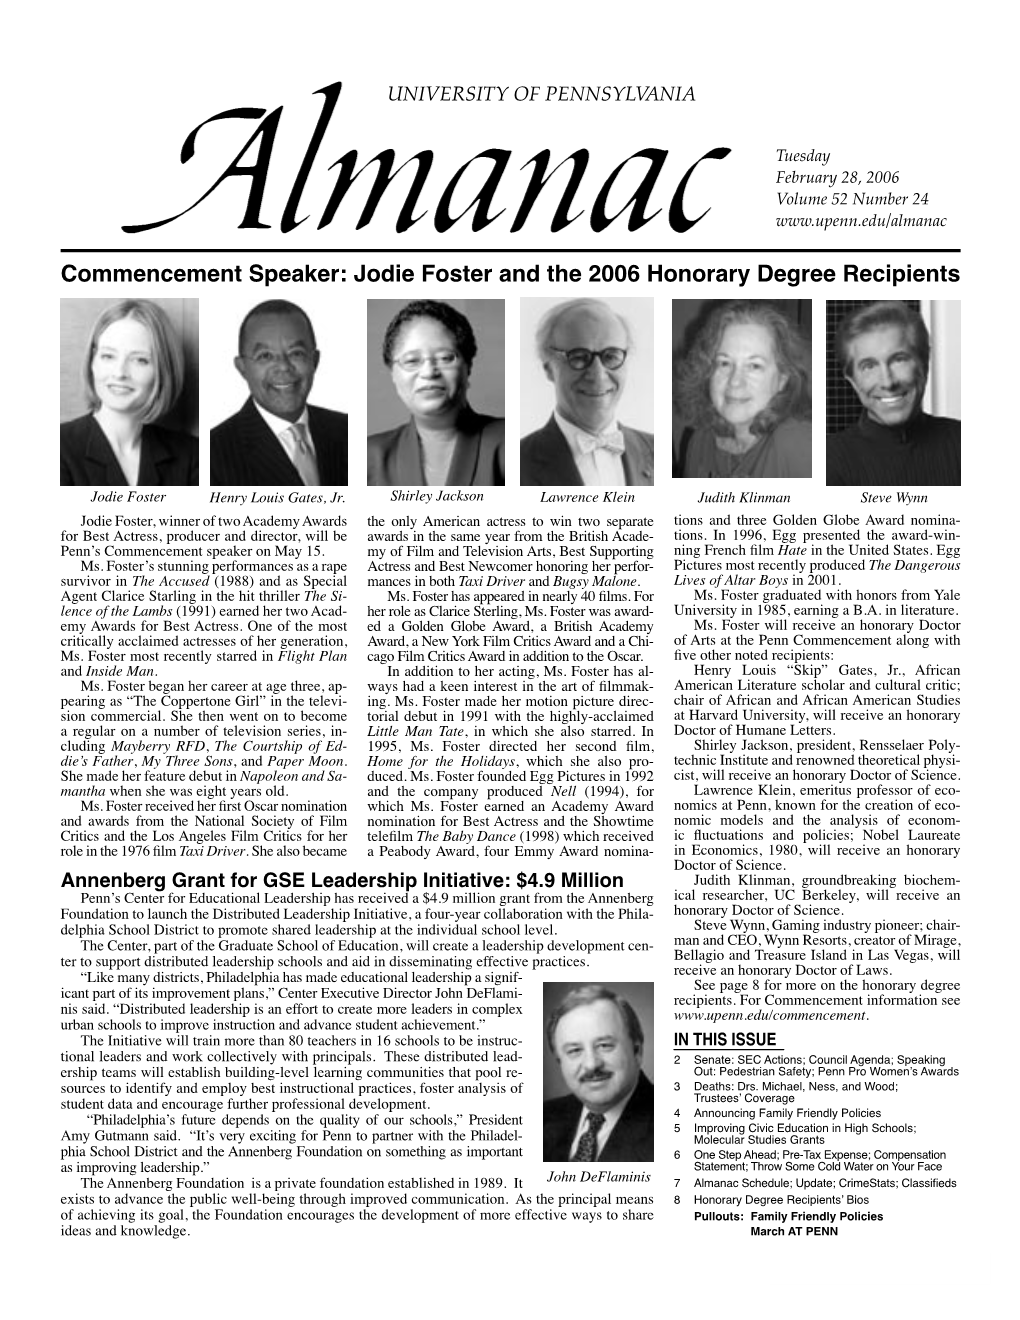 Feb. 28, 2006 Issue